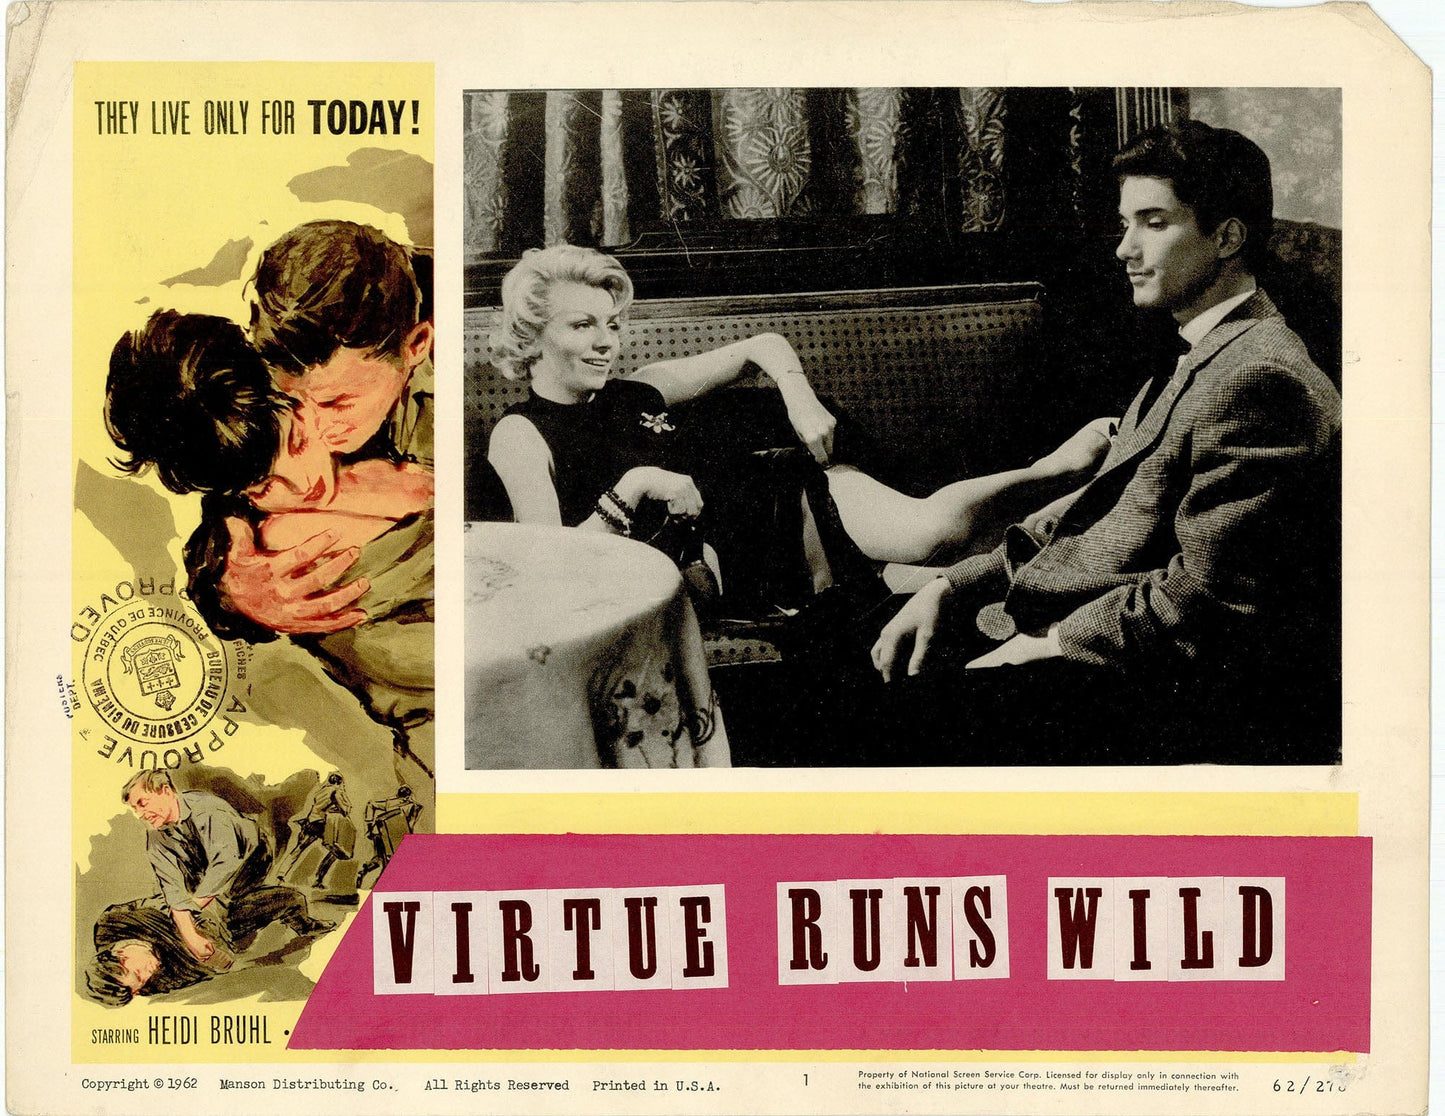 Virtue Runs Wild Movie Lobby Card